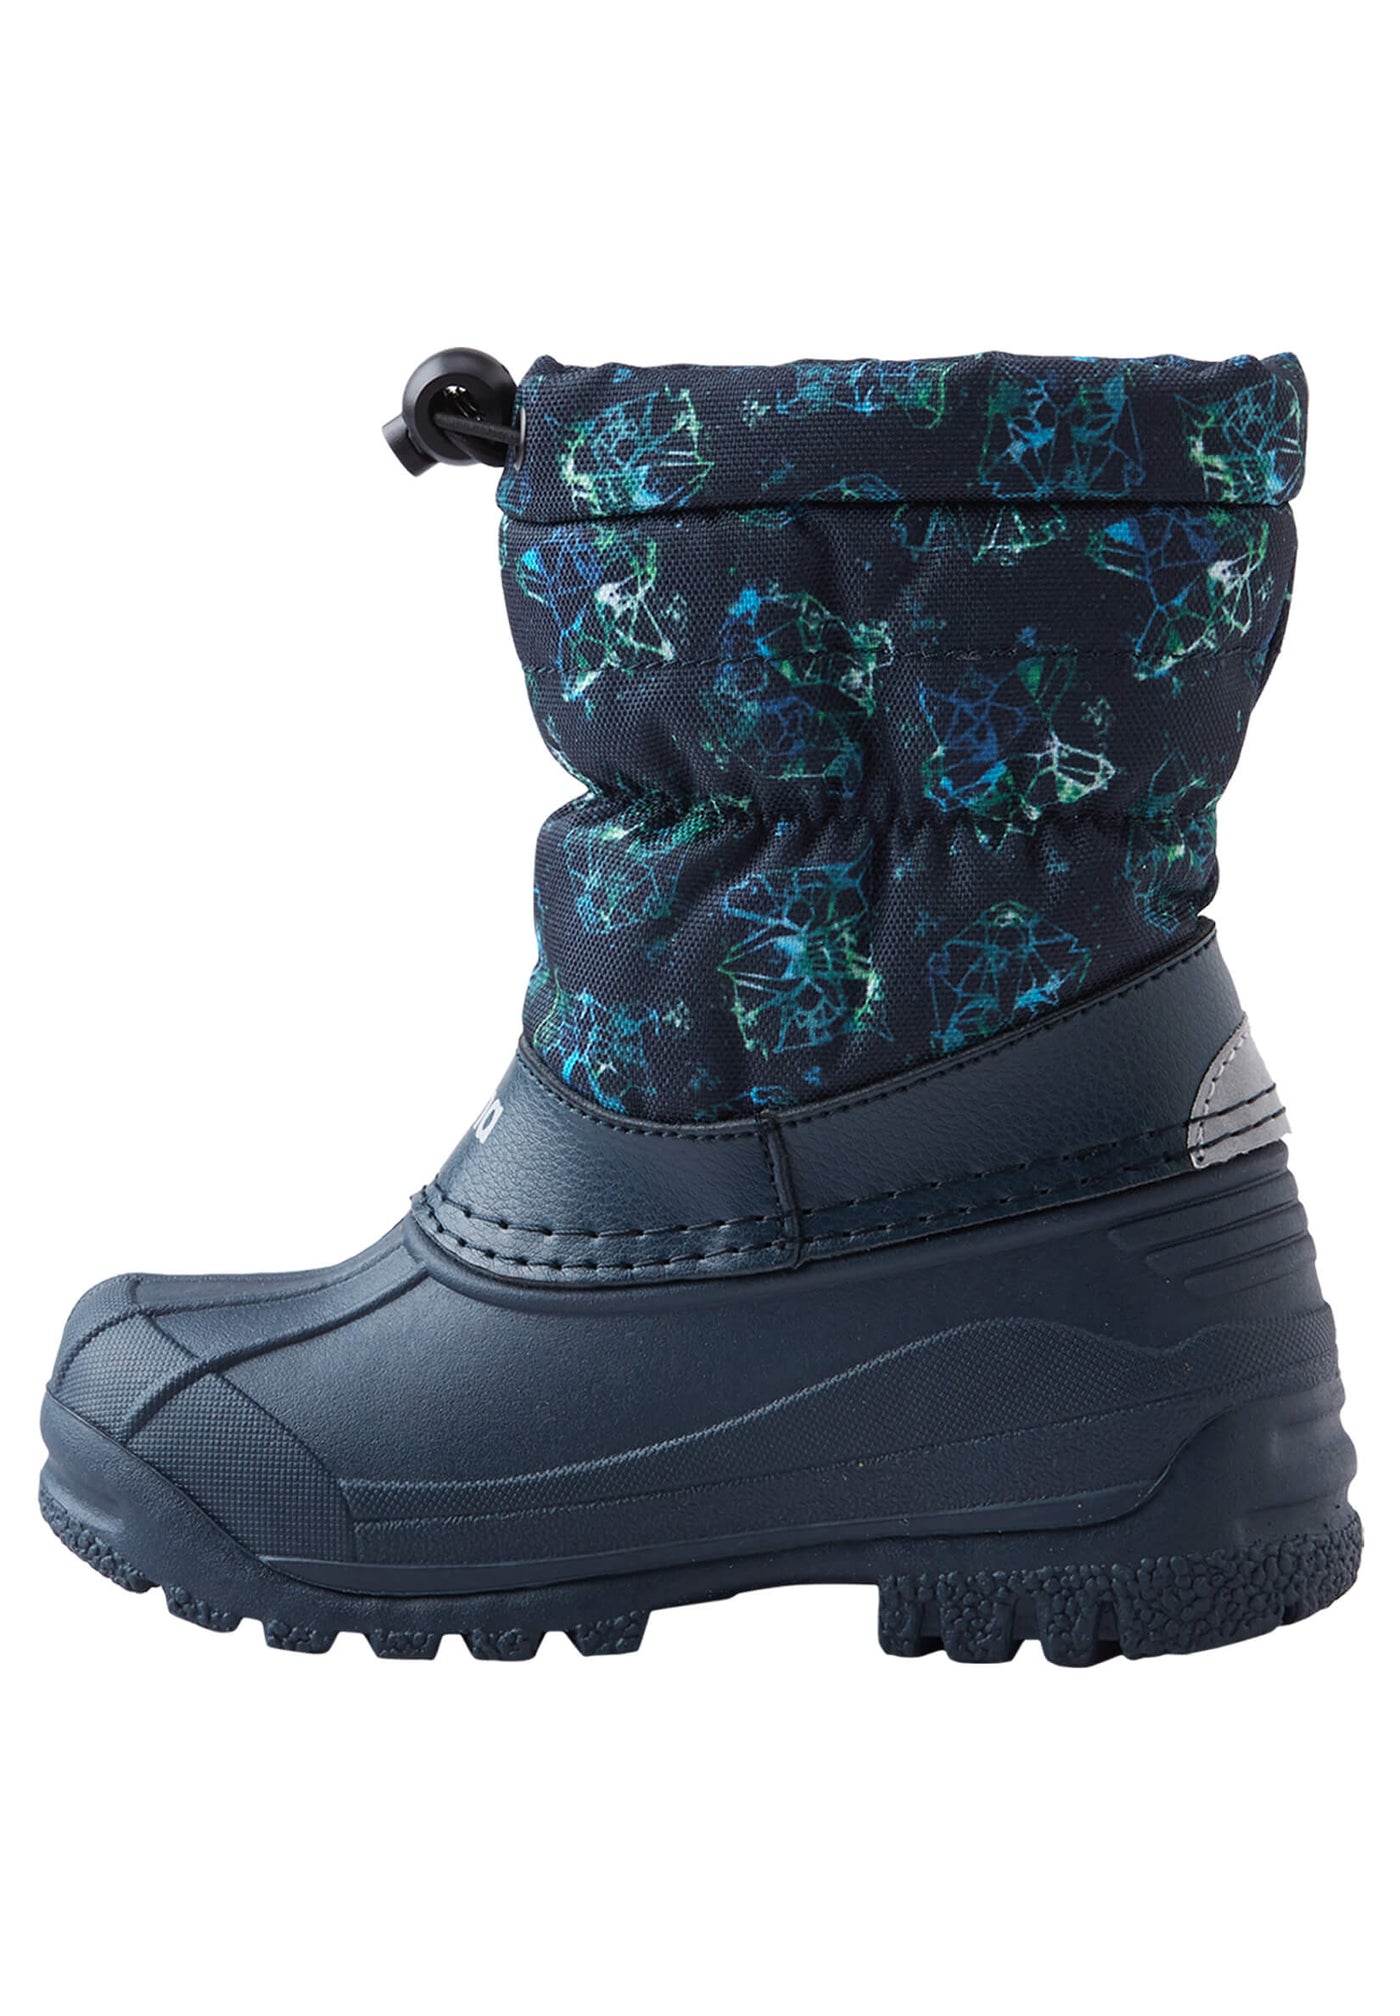 Reima Nefar Kids Waterproof Snow Boots